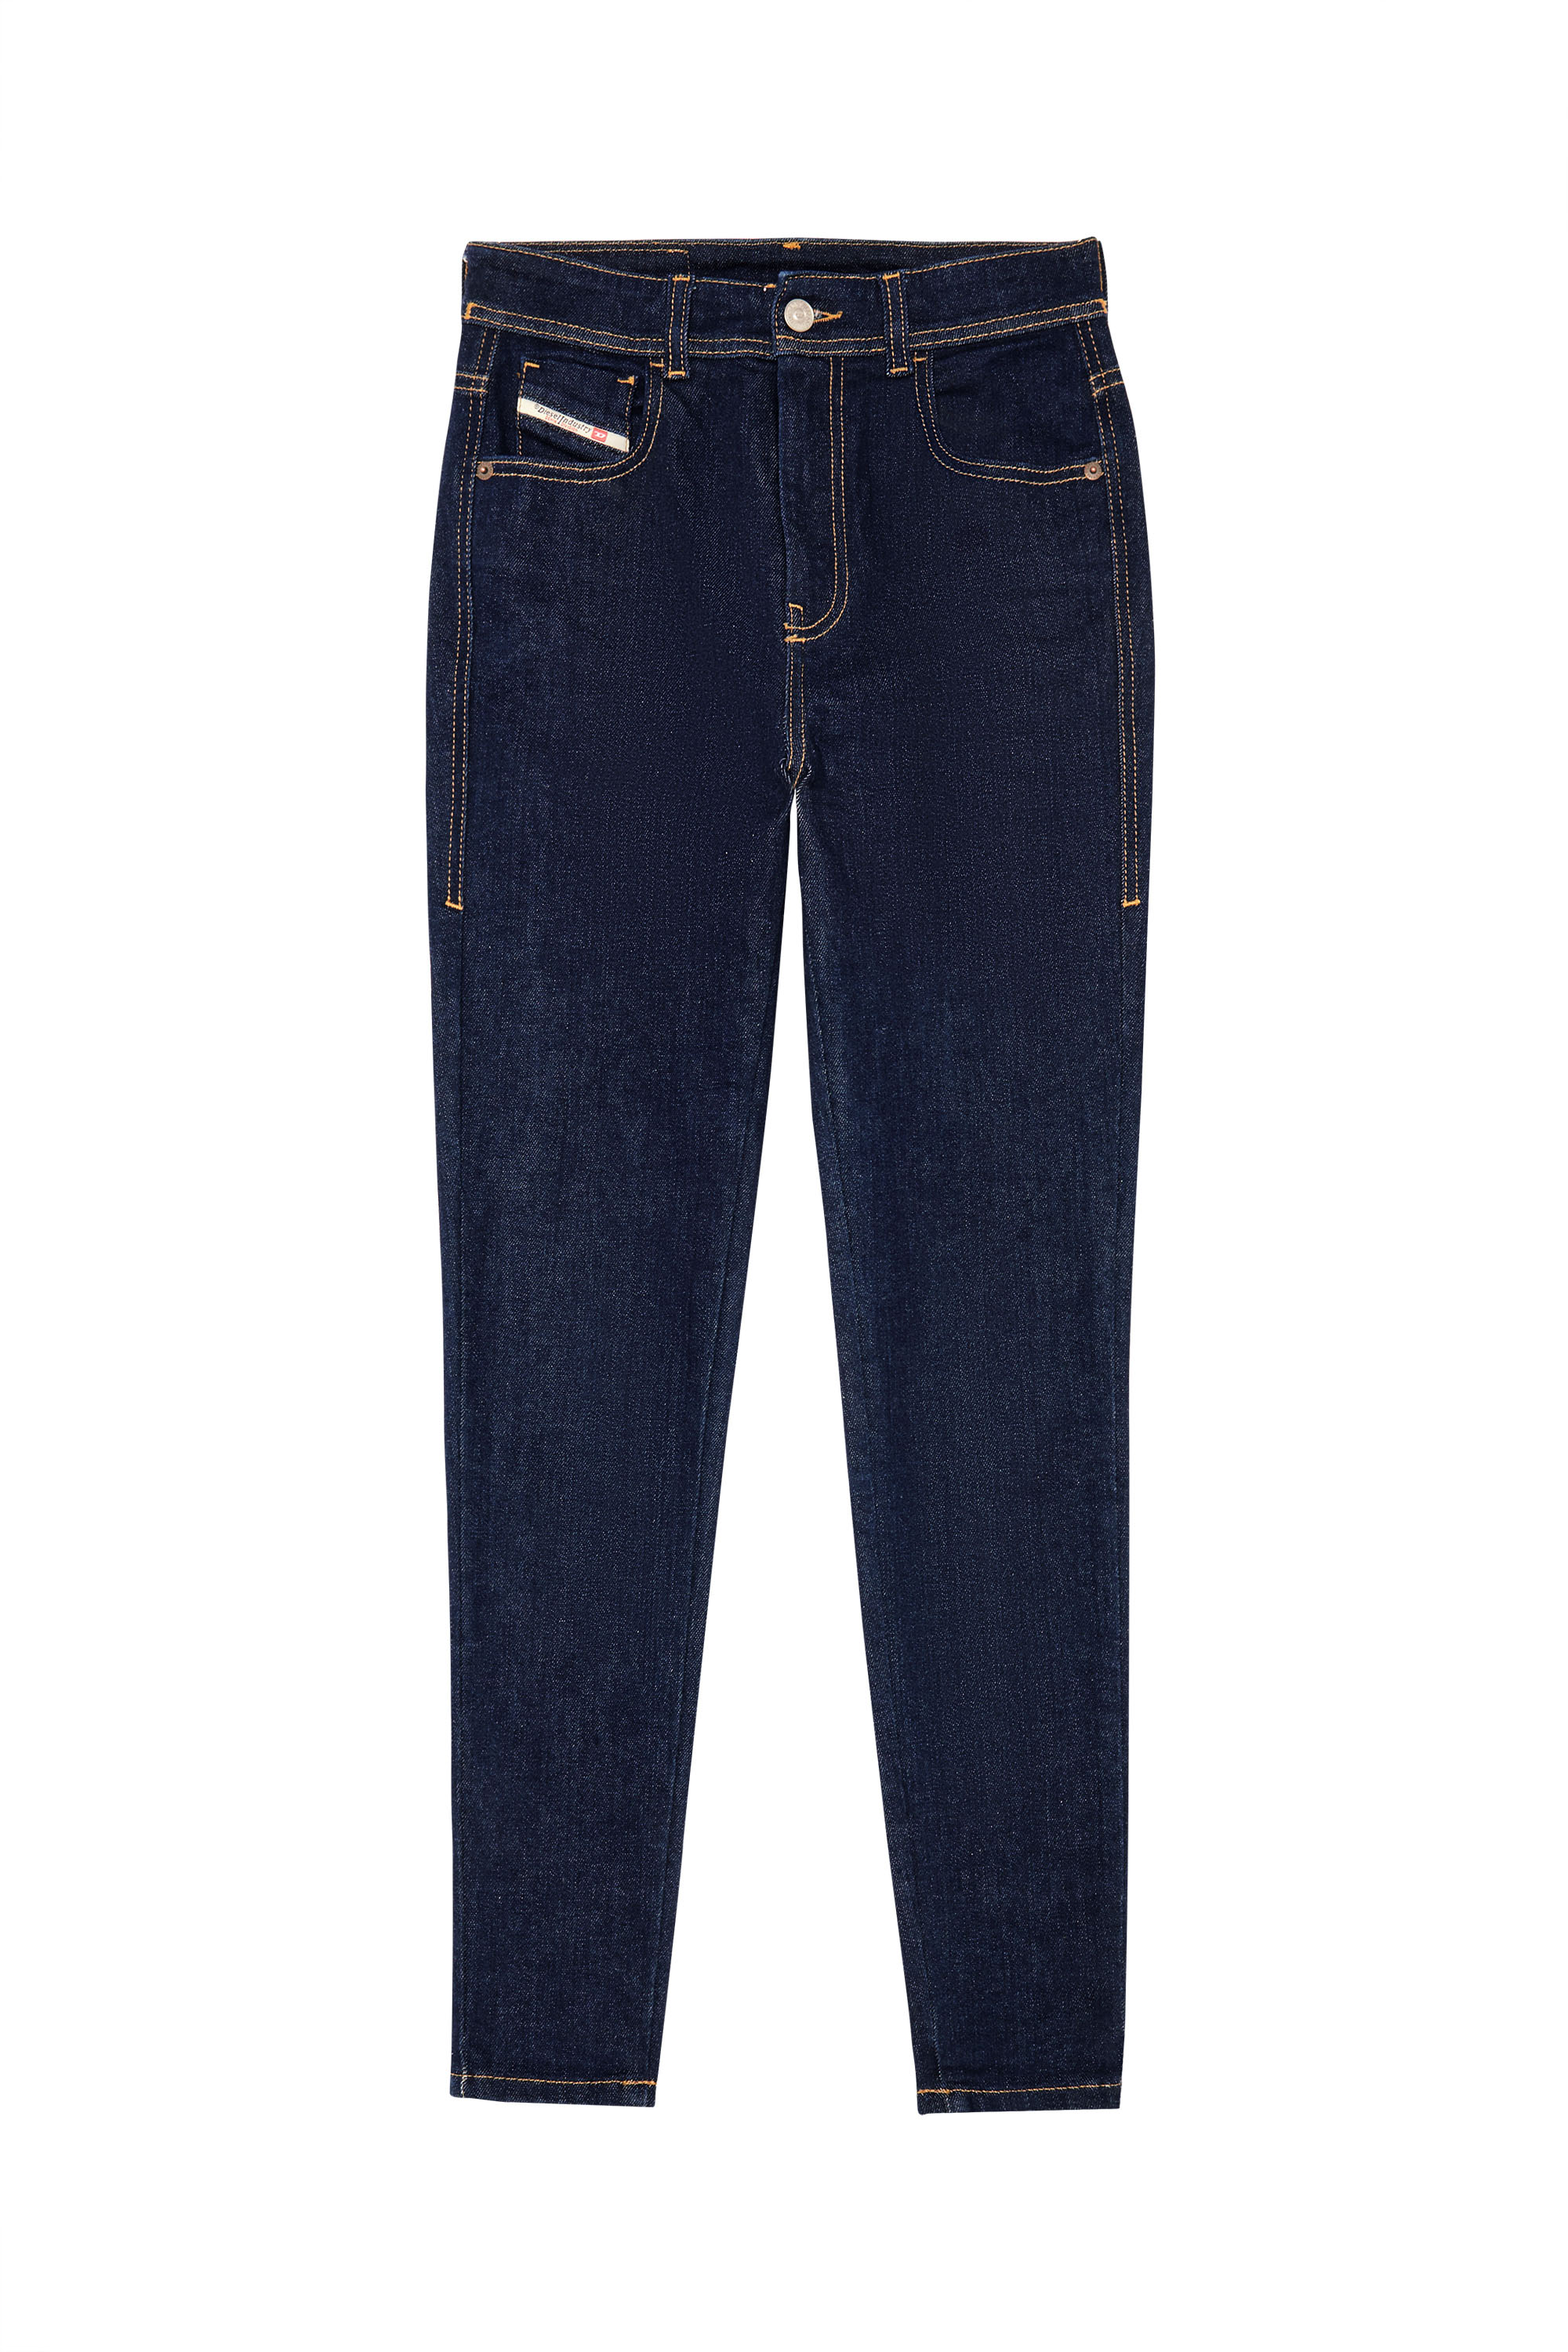 1984 Slandy high Z9C18 Super skinny Jeans, Dunkelblau - Jeans